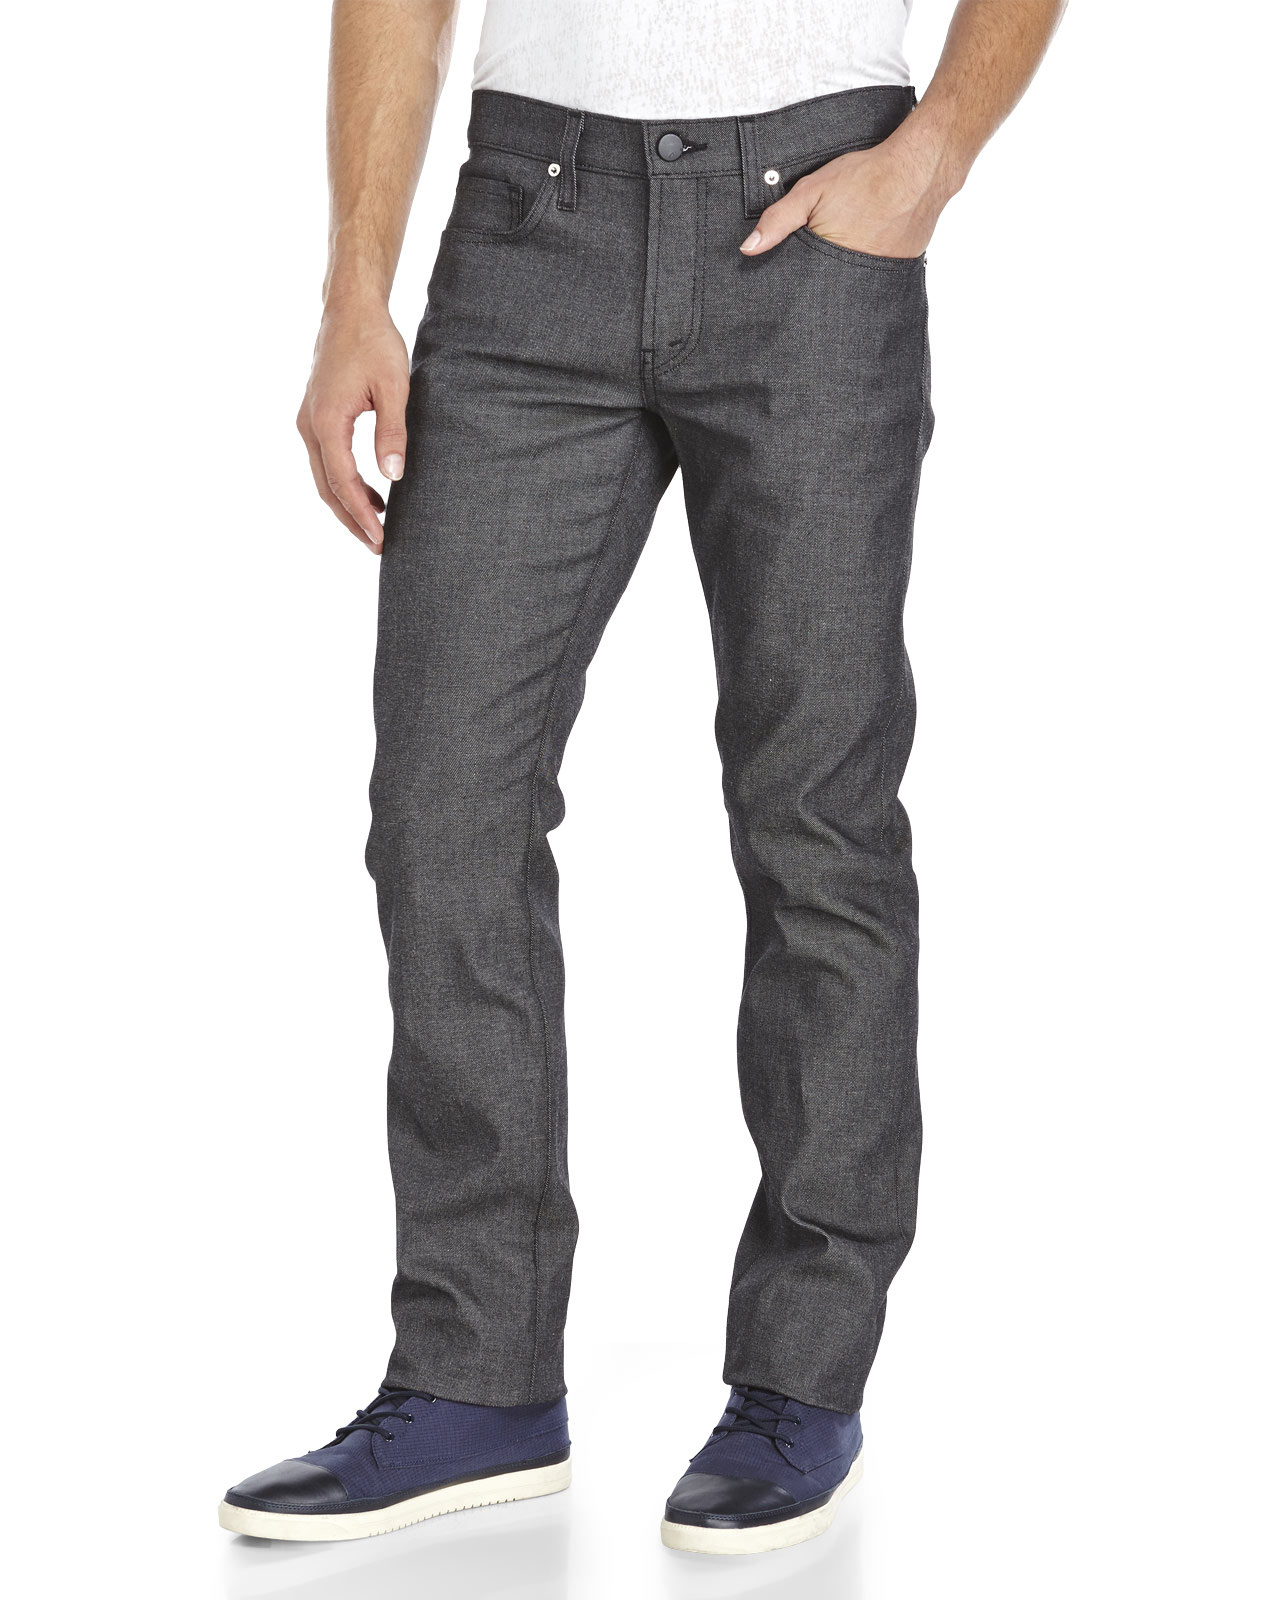 Lyst - J Brand Charcoal Kane Slim Straight Jeans in Gray for Men